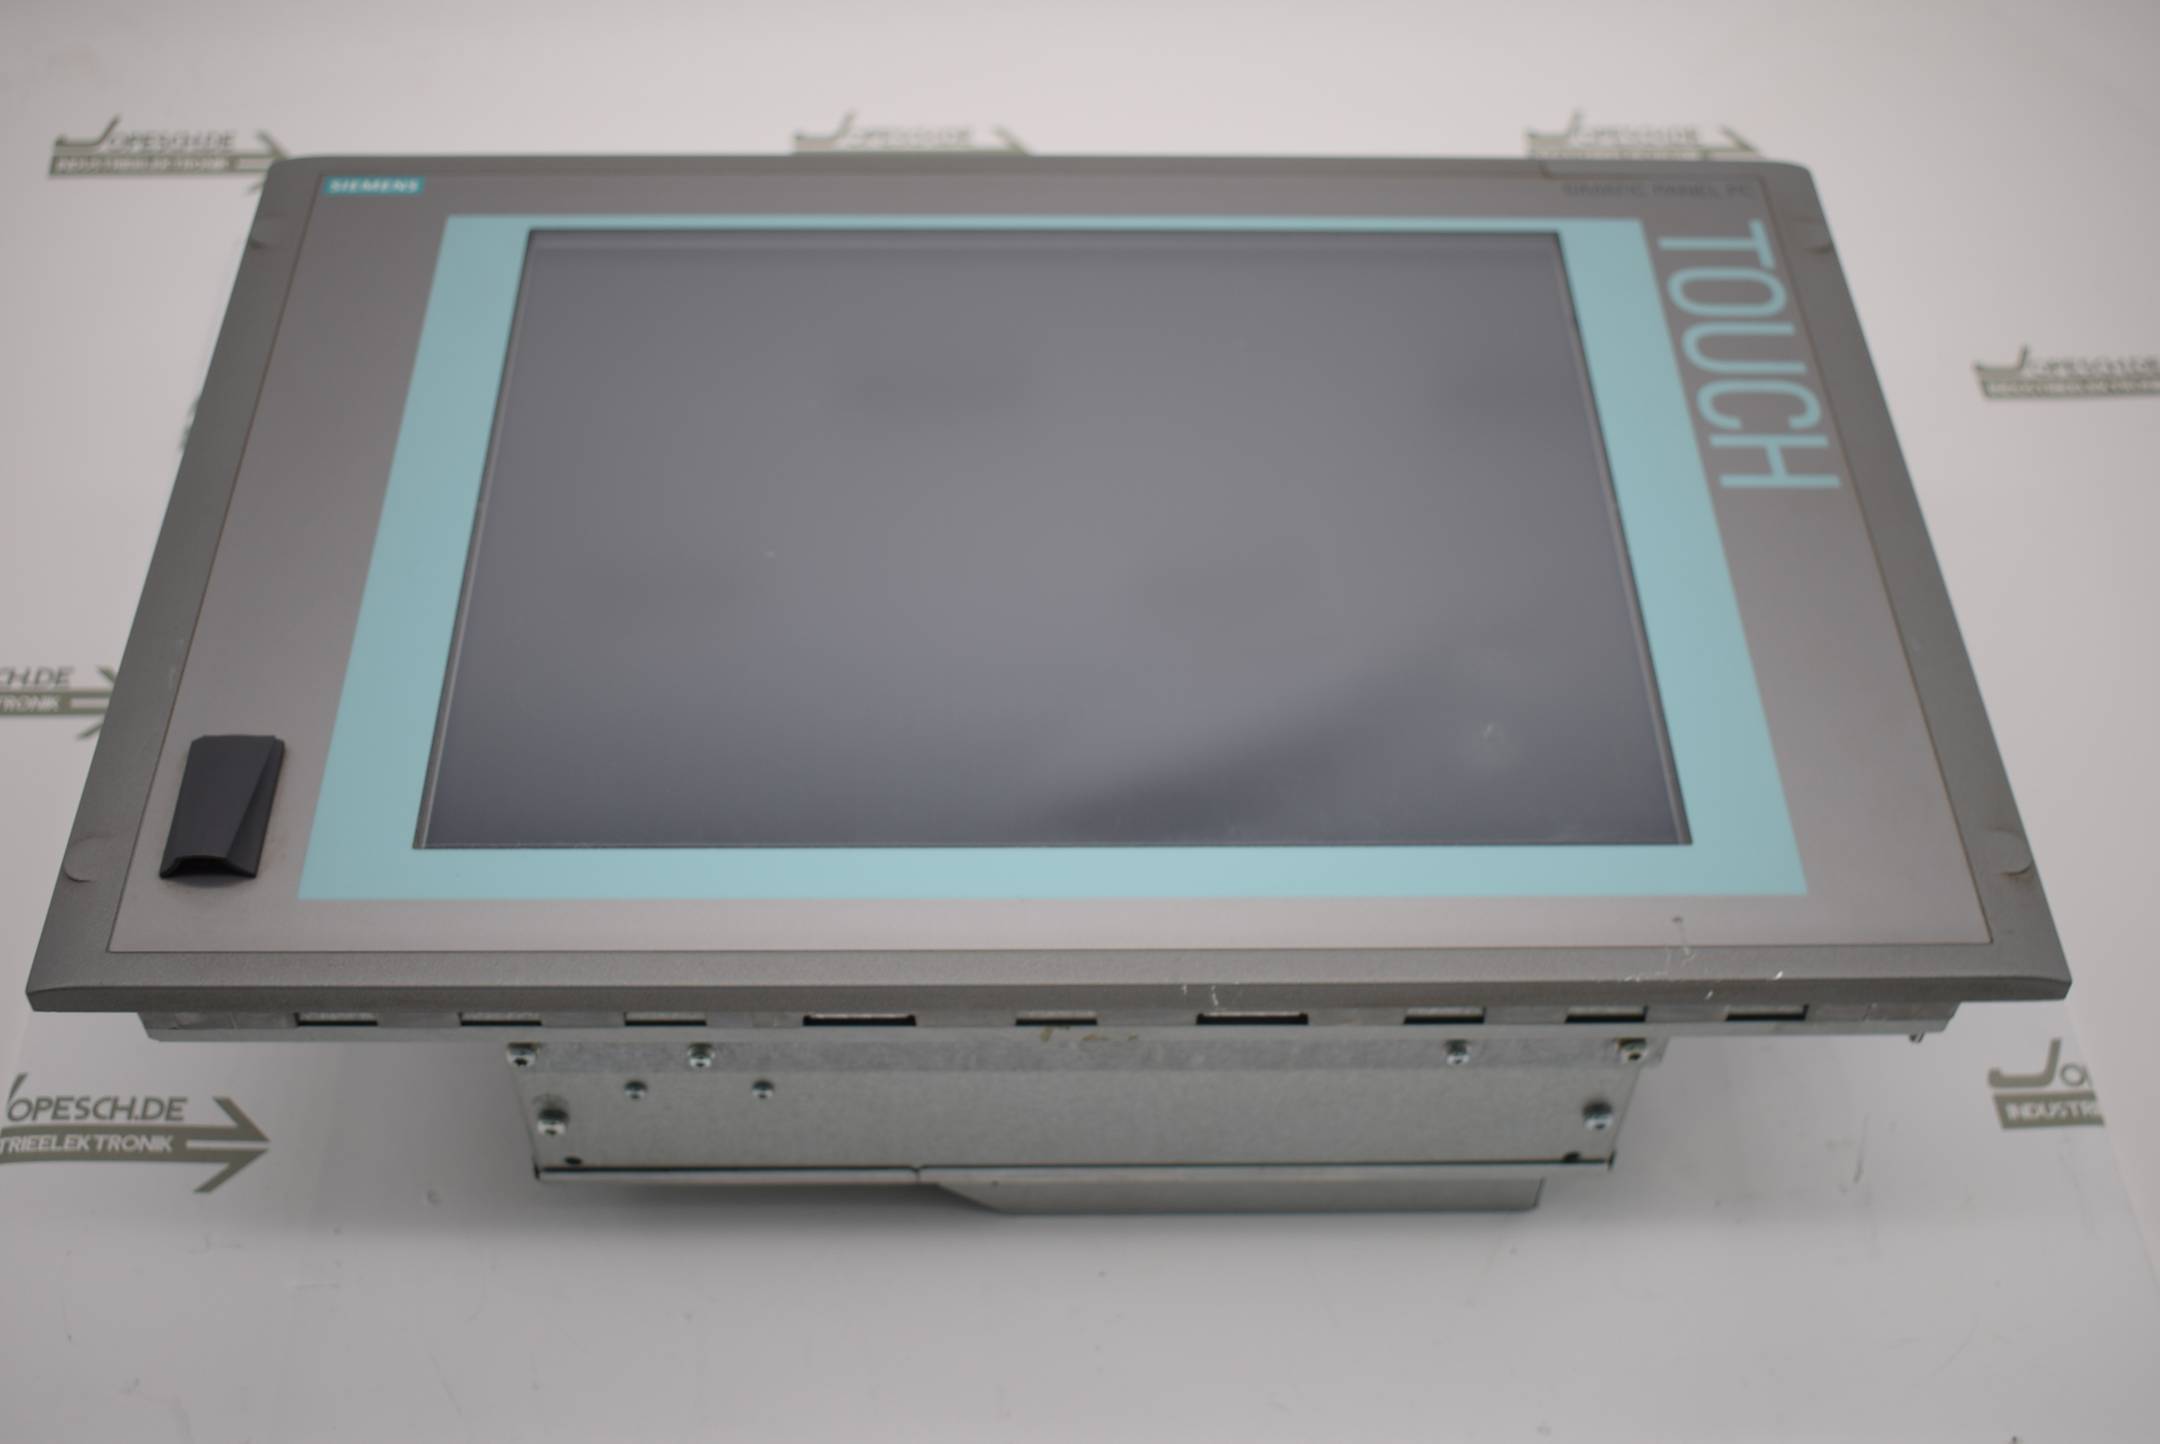 Siemens Simatic Panel PC 577B (AC) 6AV7832-0BA10-1CC0 ( 6AV7 832-0BA10-1CC0 )